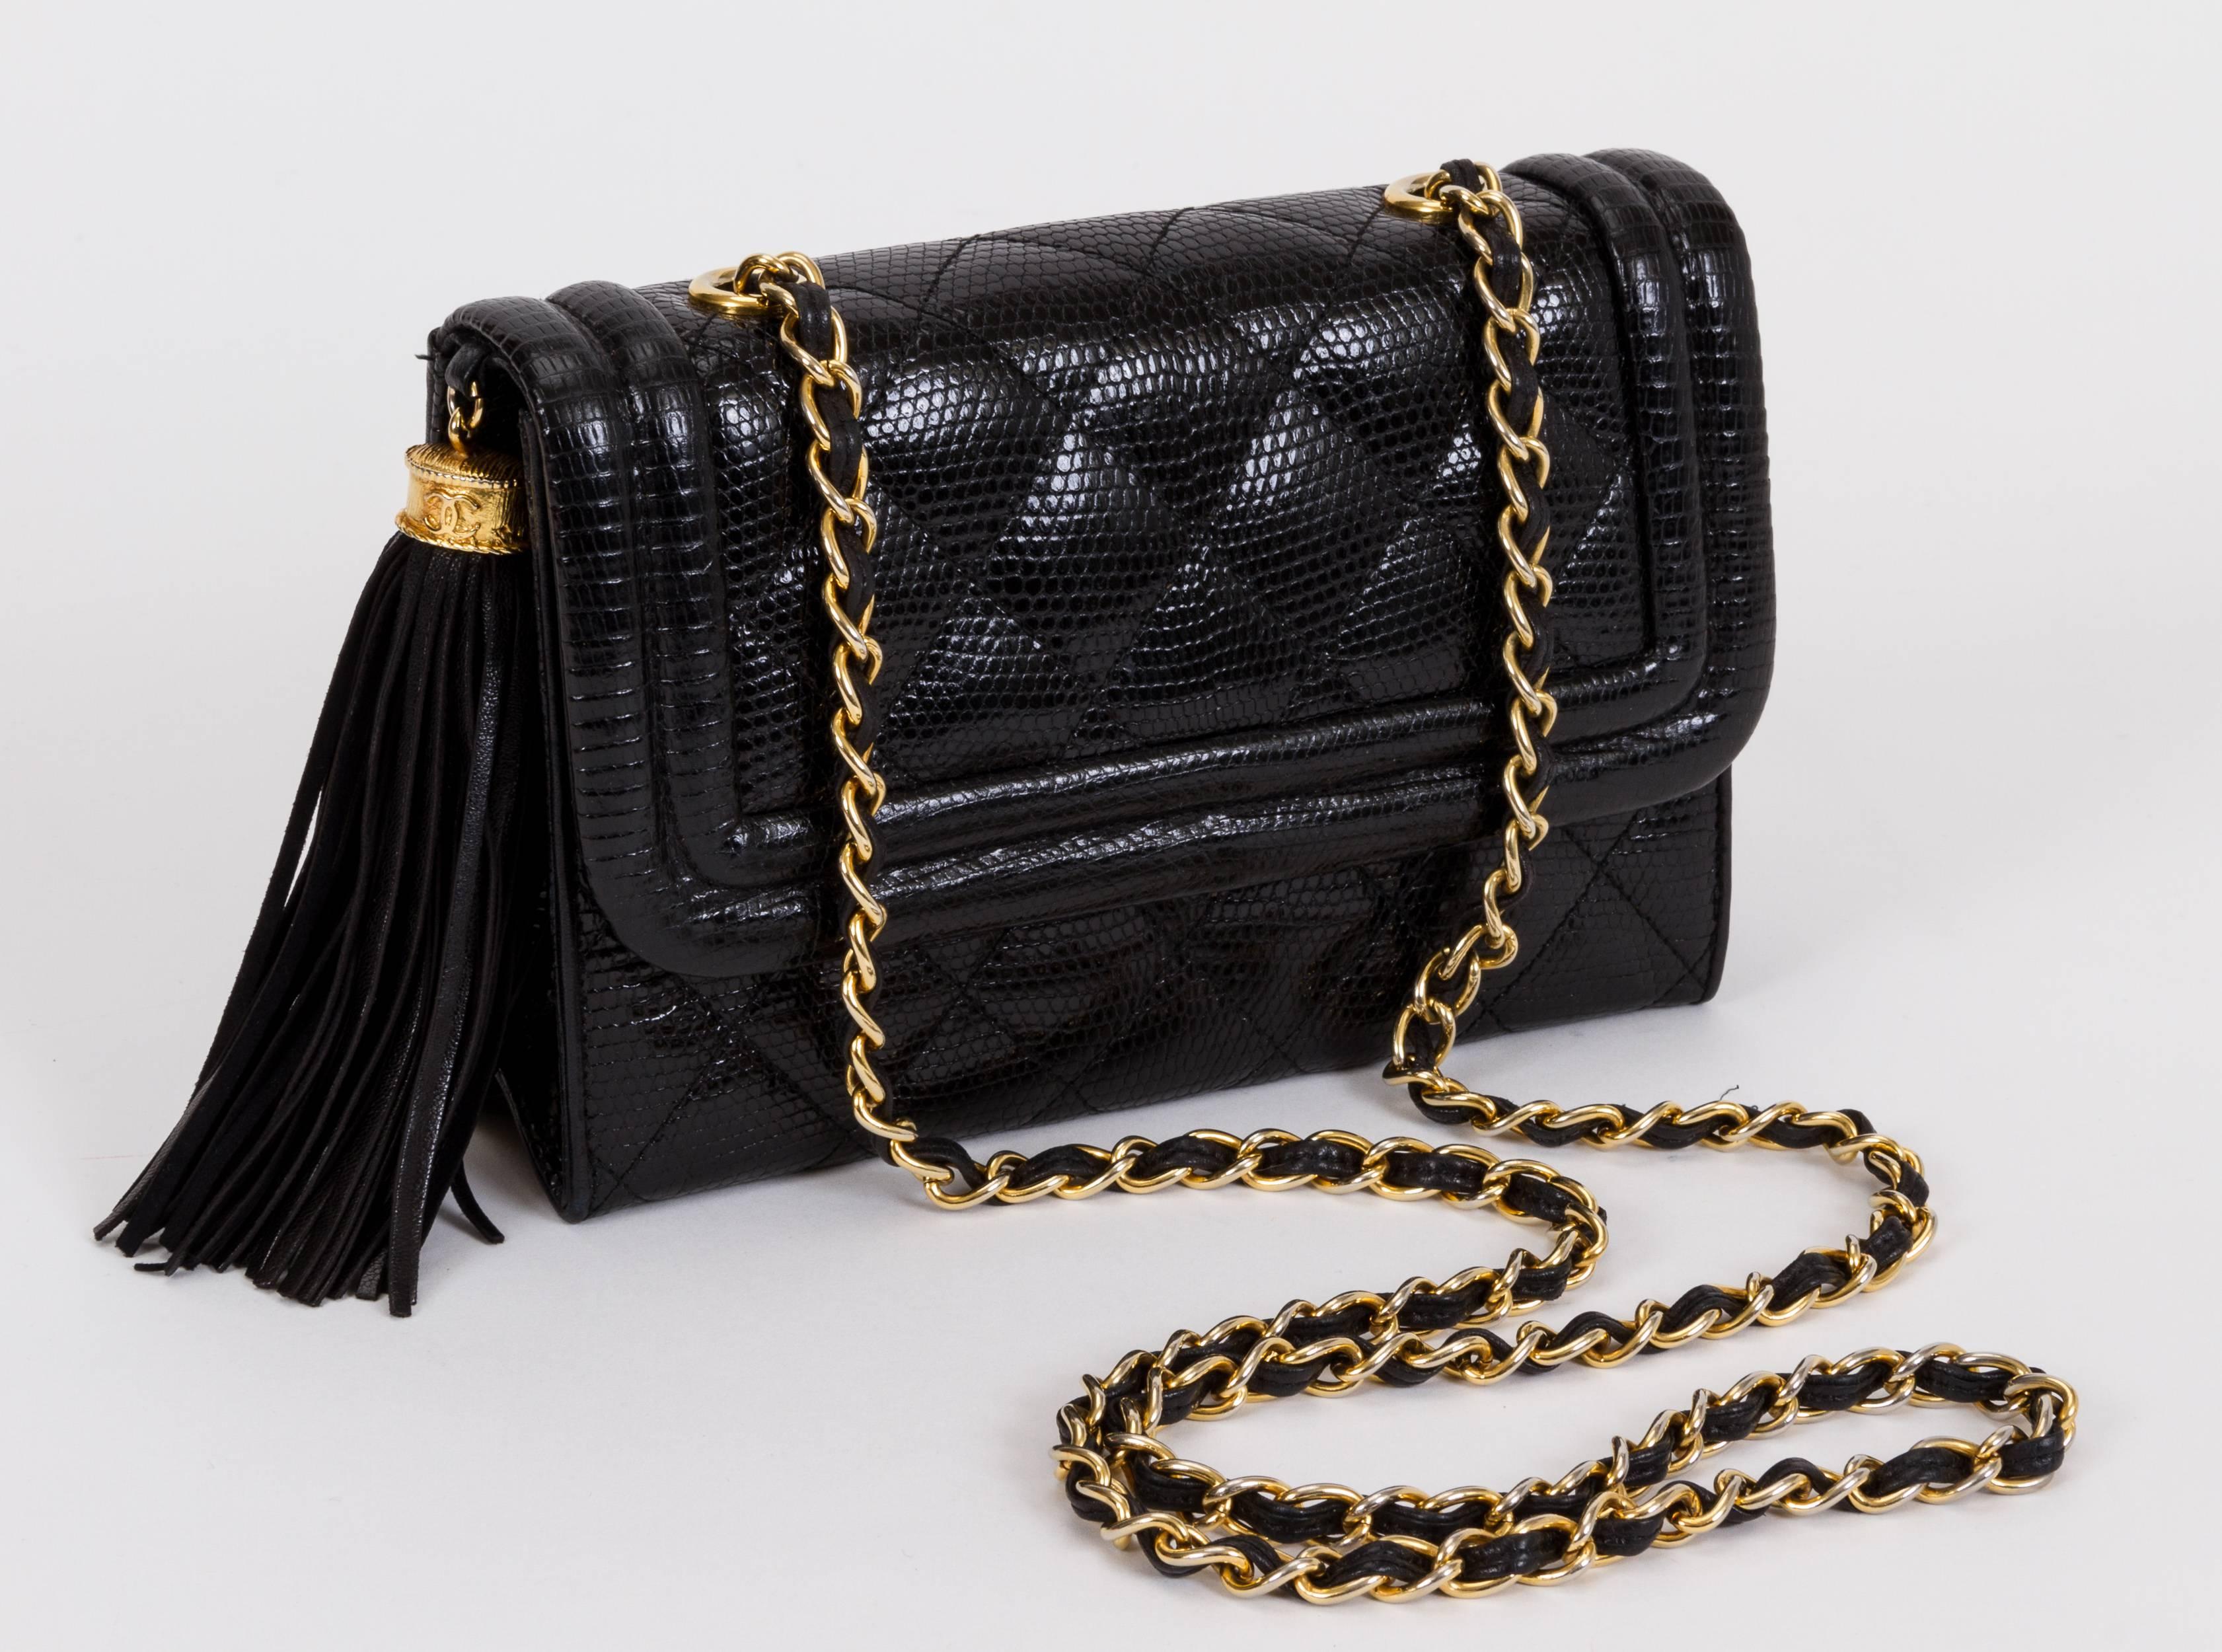 Chanel lizard-embossed leather quilted evening bag. Shoulder drop, 22